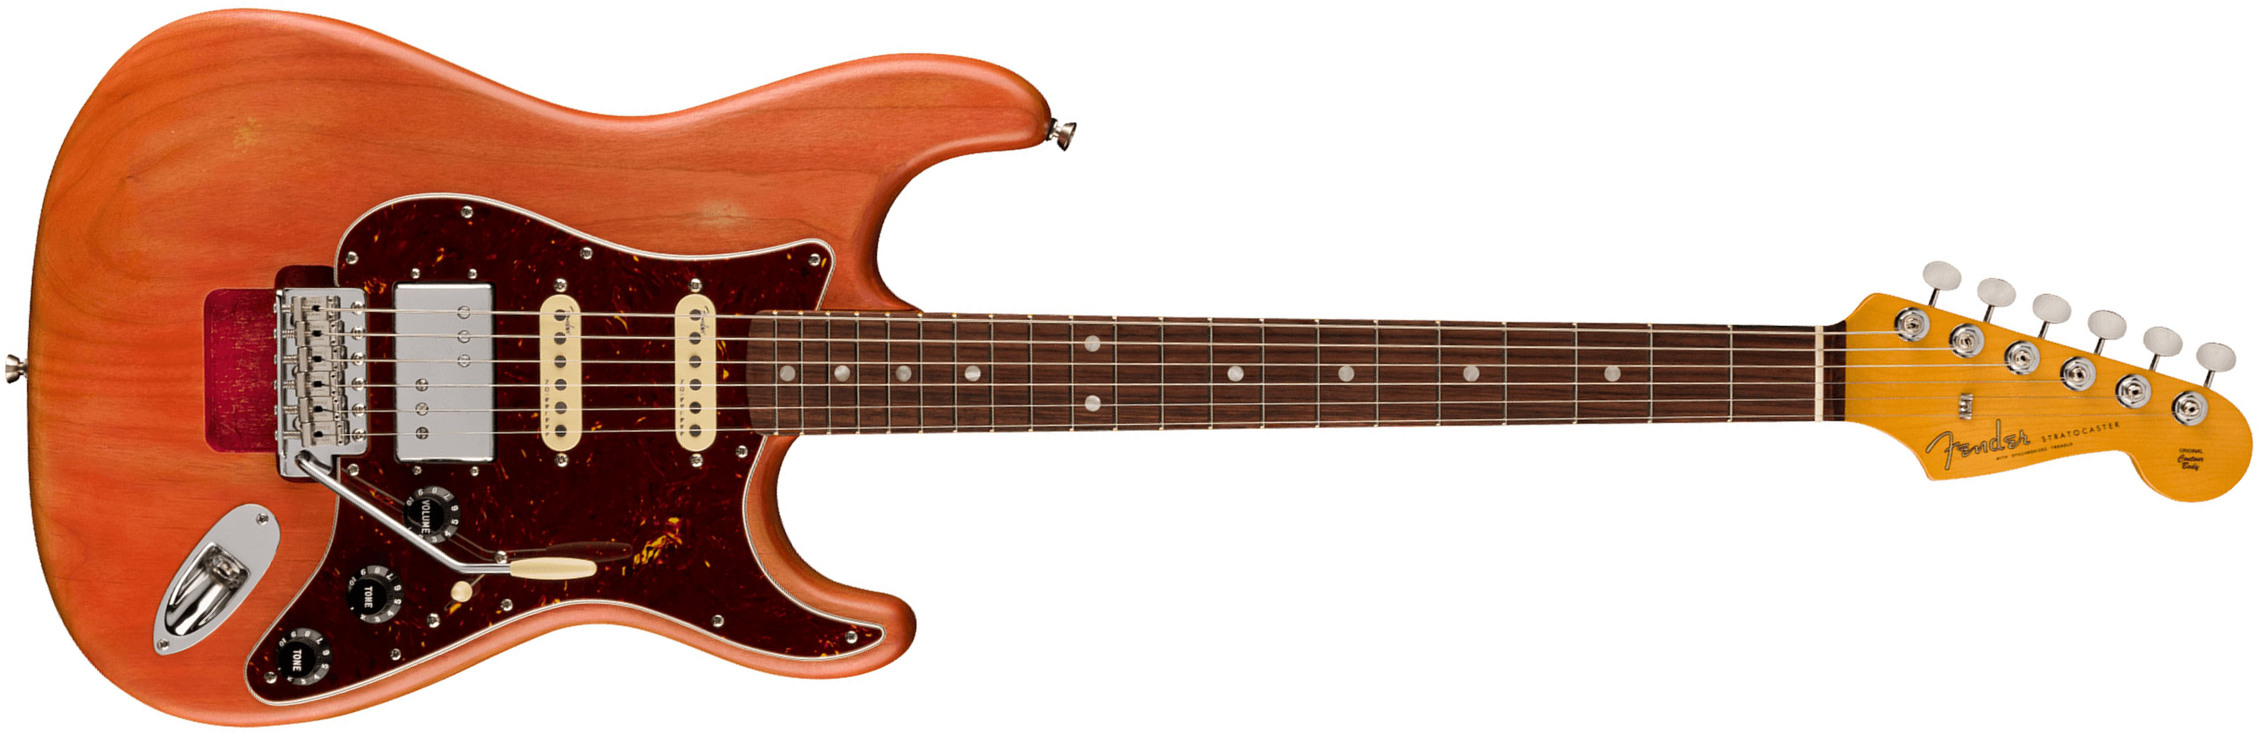 Fender Michael Landau Strat Coma Stories Usa Signature Hss Trem Rw - Coma Red - Guitarra eléctrica con forma de str. - Main picture